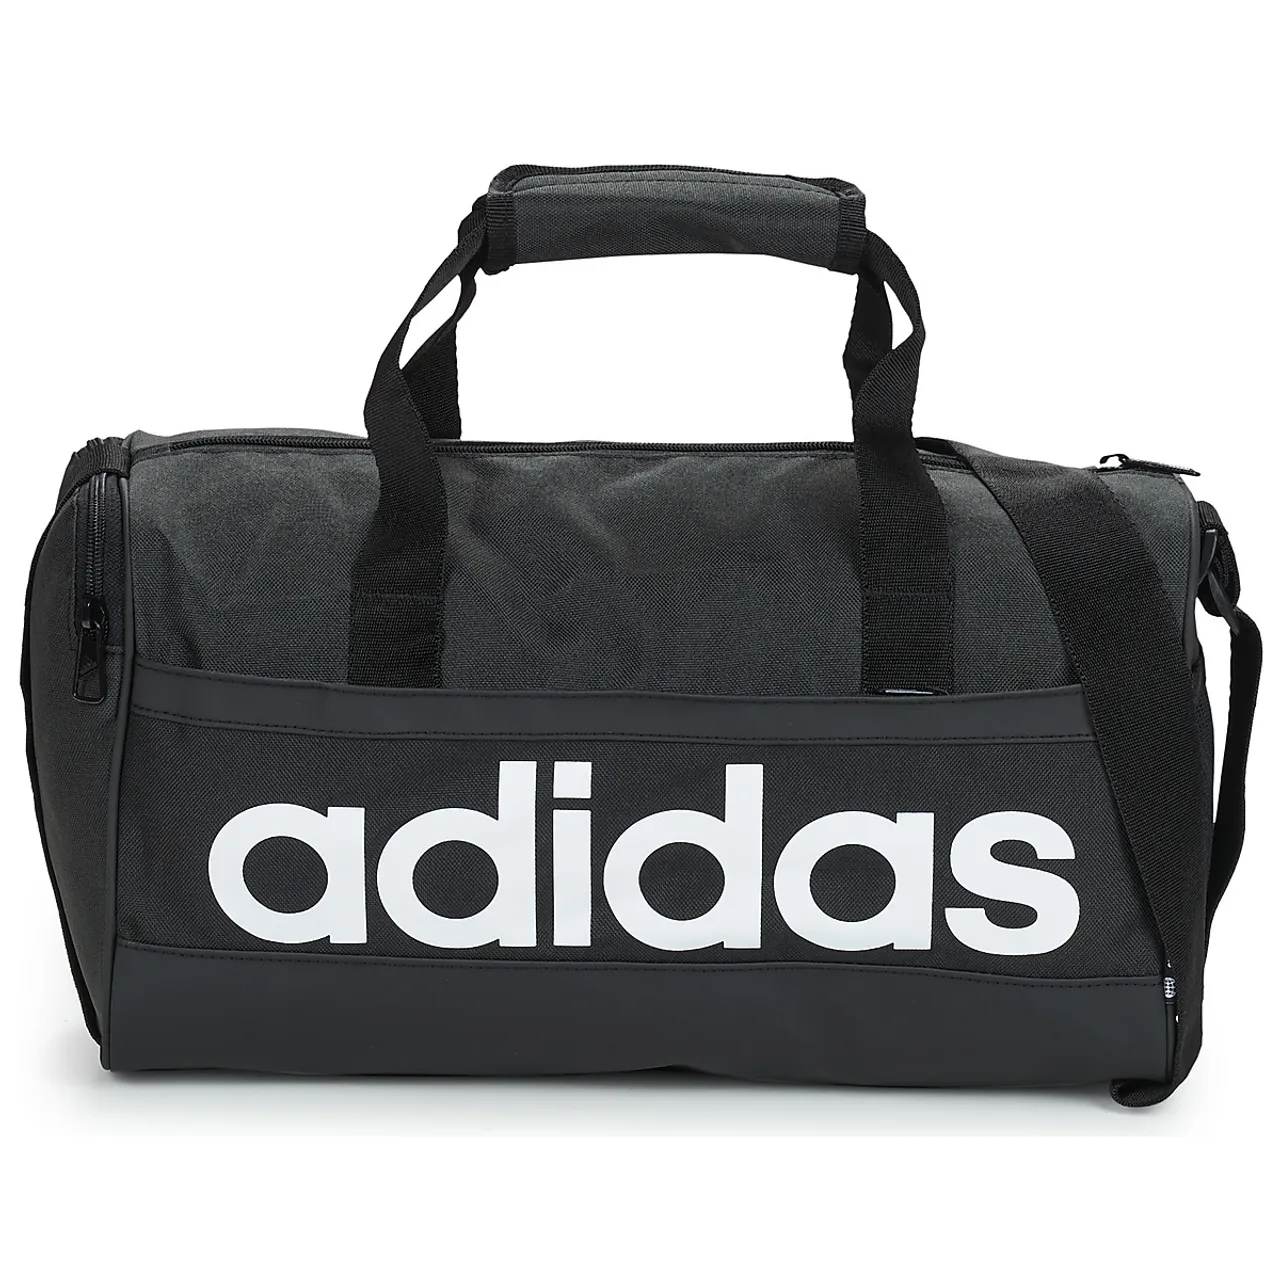 adidas  LINEAR DUF XS  women's Sports bag in Black